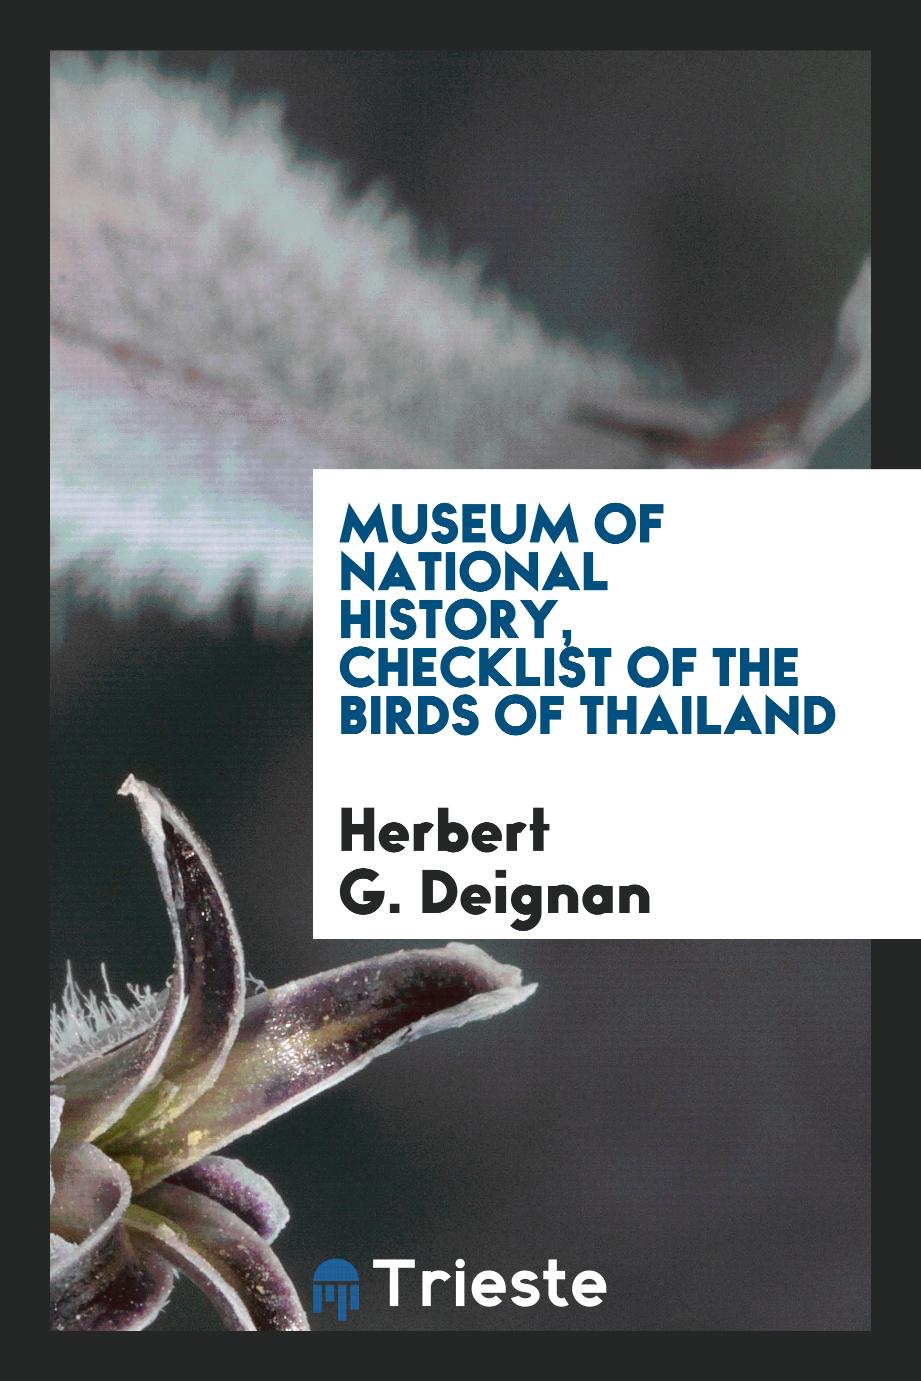 Herbert G. Deignan - Museum of National History, Checklist of the Birds of Thailand